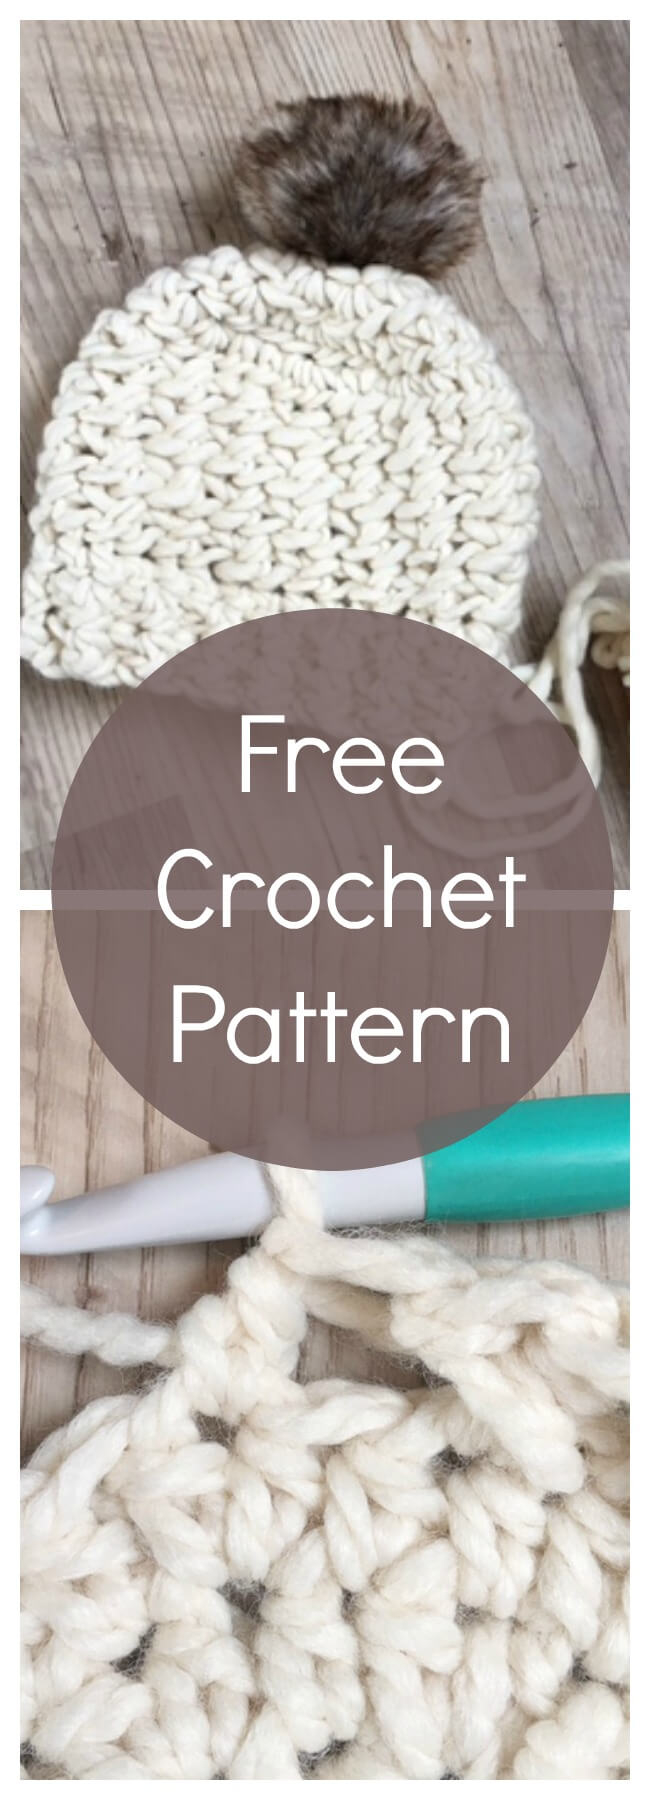 Free Crochet Beanie Pattern A Chunky Yarn Crochet Pattern To Make A Hat You Will Love